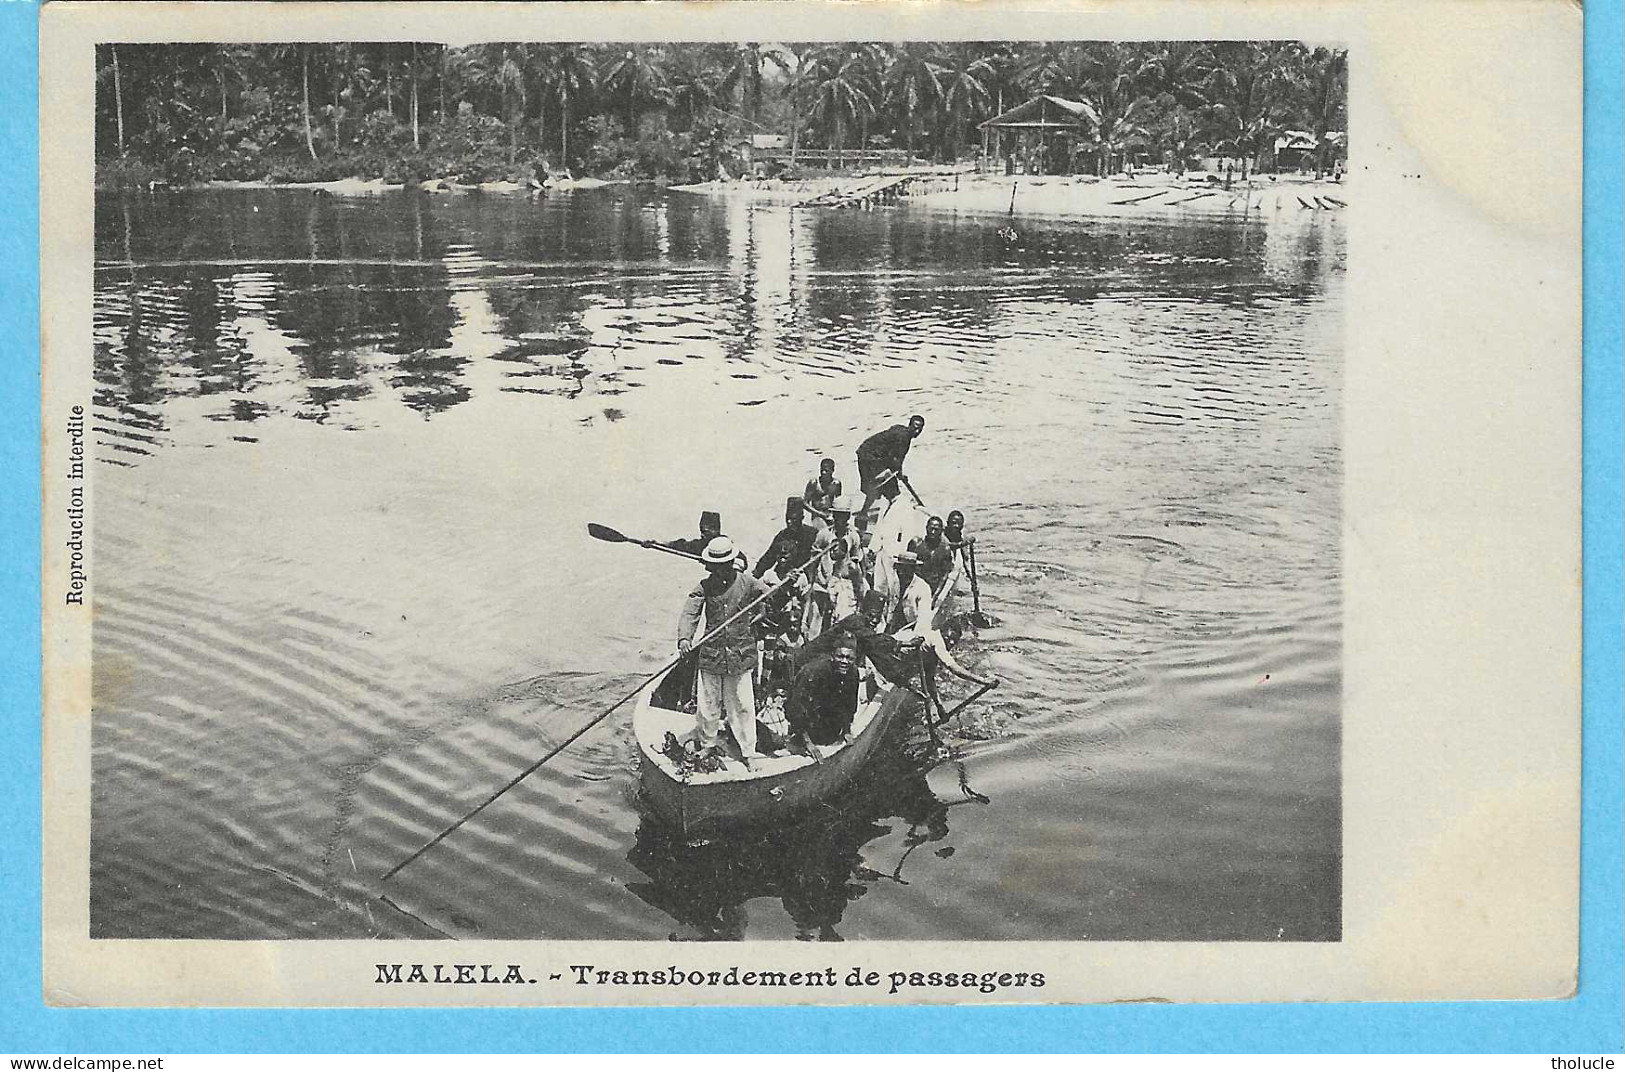 Timbre Type Mols-Congo Belge Unilingue-1909 10c Carmin-N°51-Cachet "Boma-1910"-Malela-Transbordement De Passagers-Barque - Covers & Documents